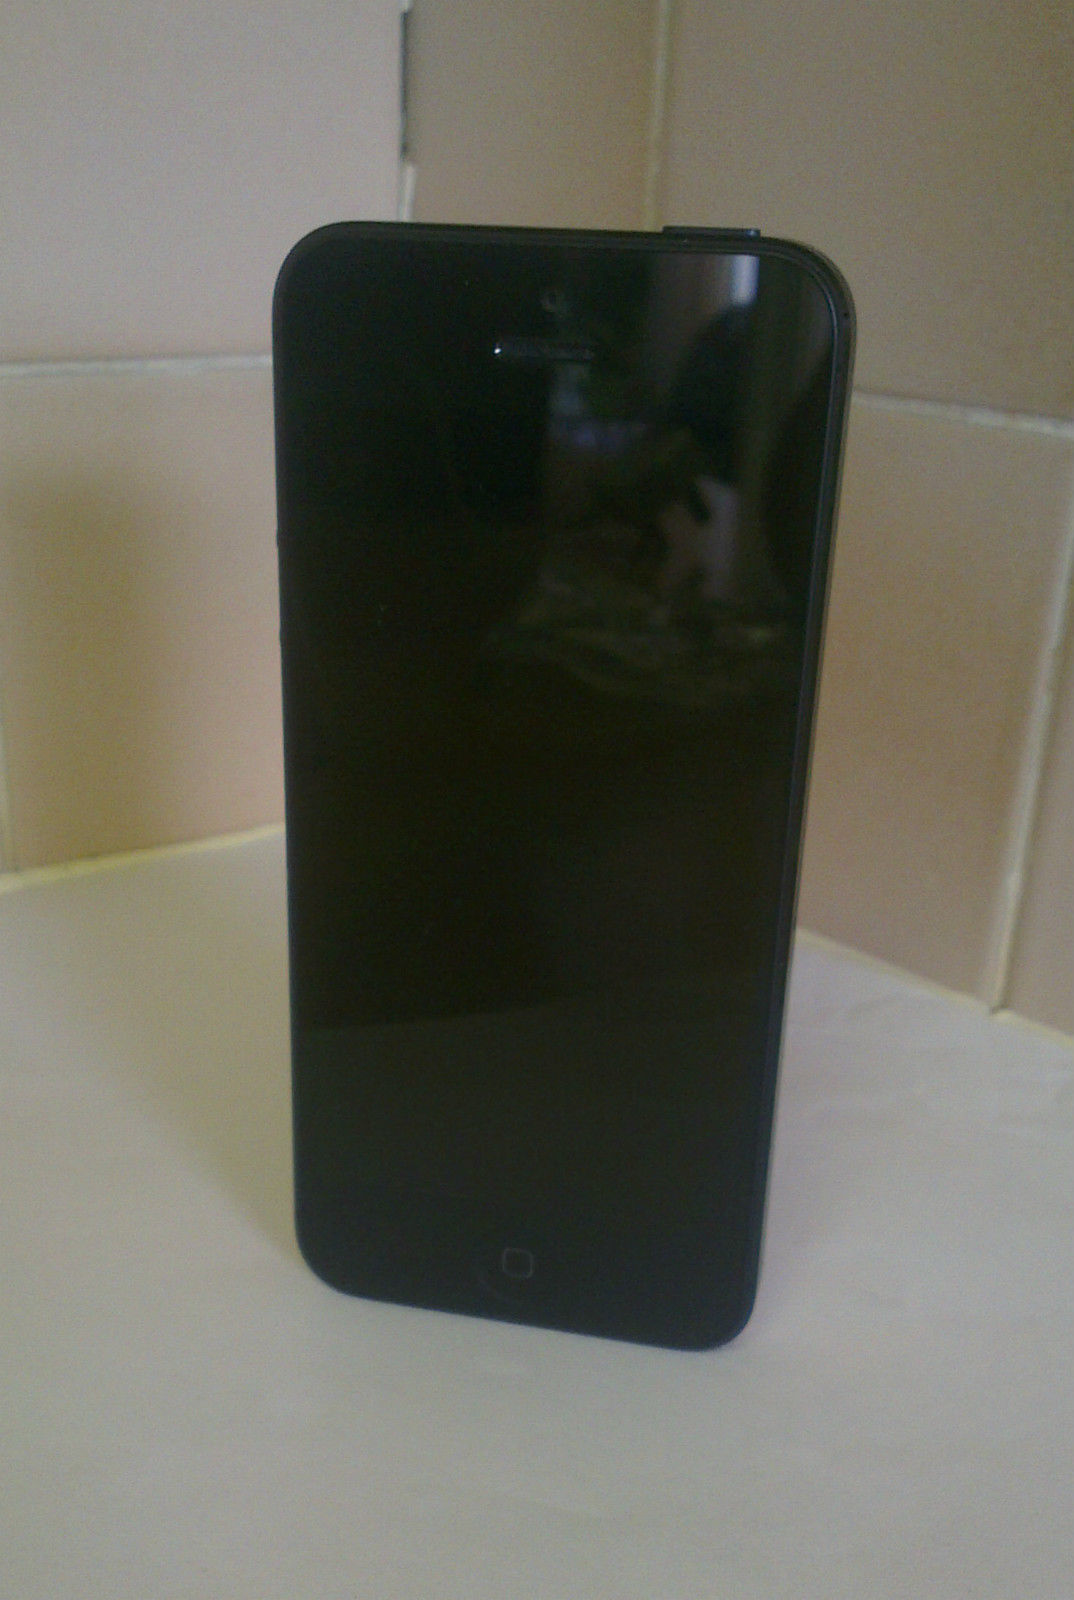 Apple iPhone 5 - 16 GB - Black & Slate (Unlocked) Smartphone GRADE -A- & BOXED